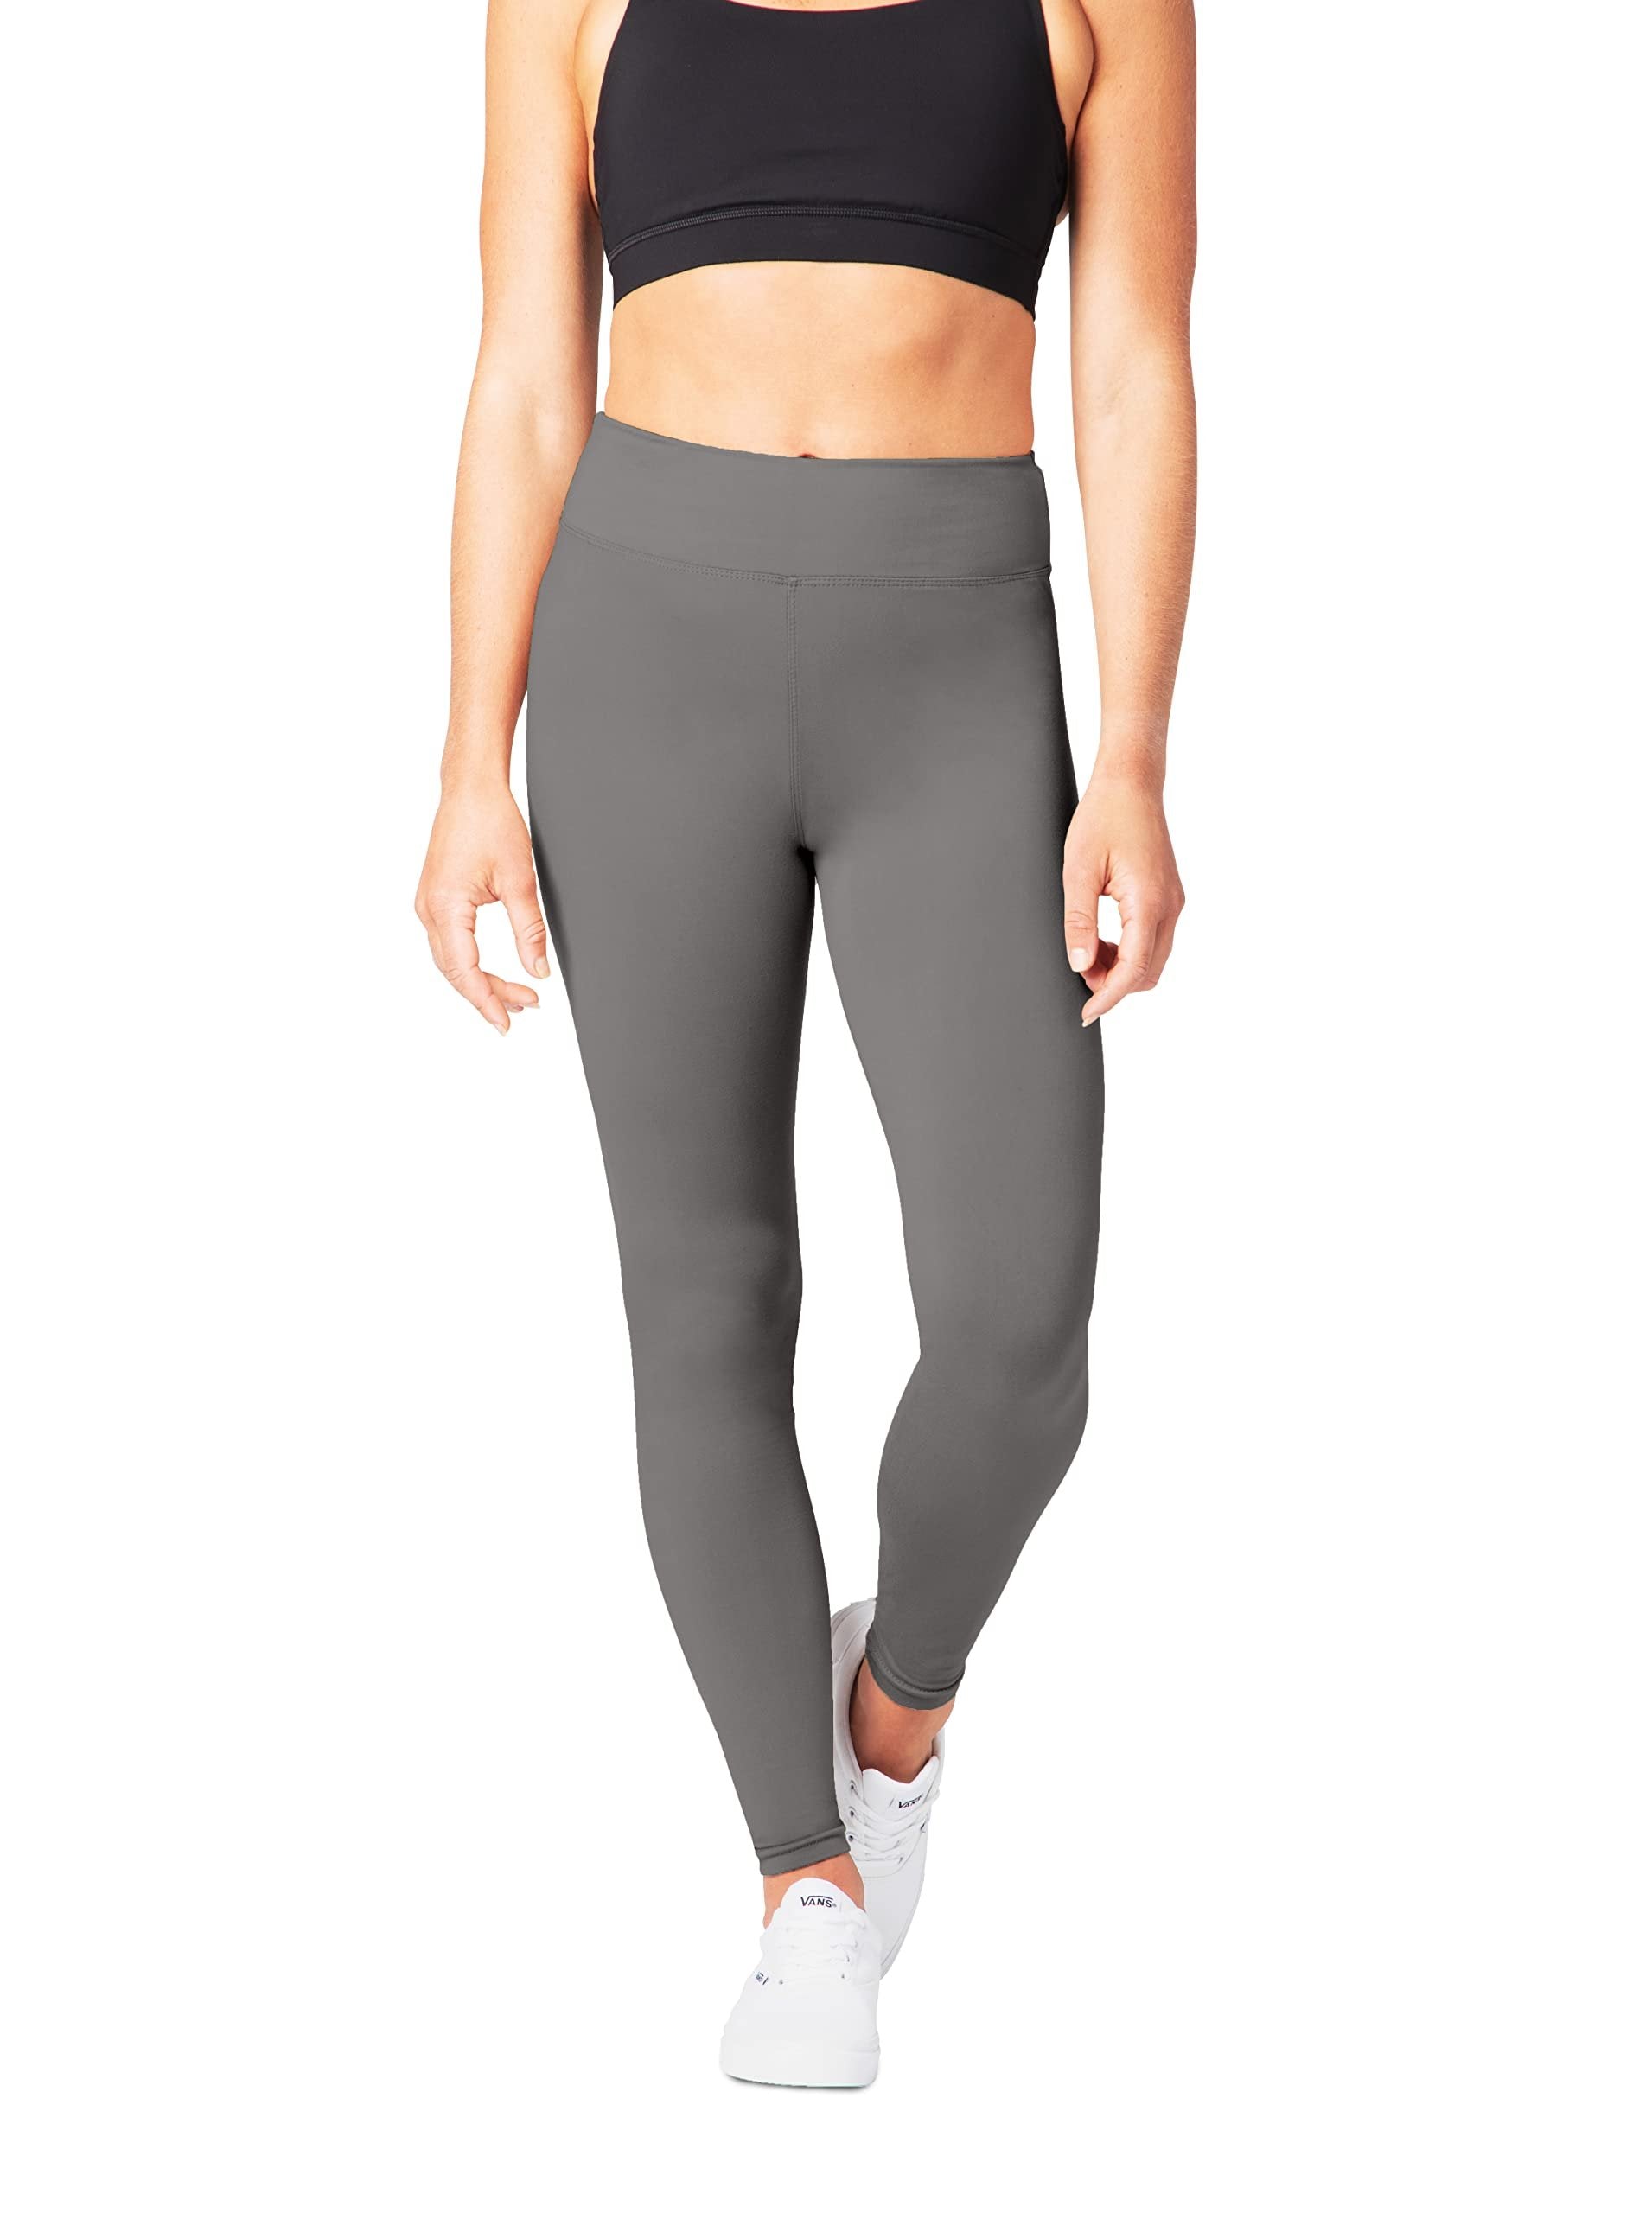 SATINA High Waisted Plus Size Gray Leggings - Workout/Yoga (3 Waistband)